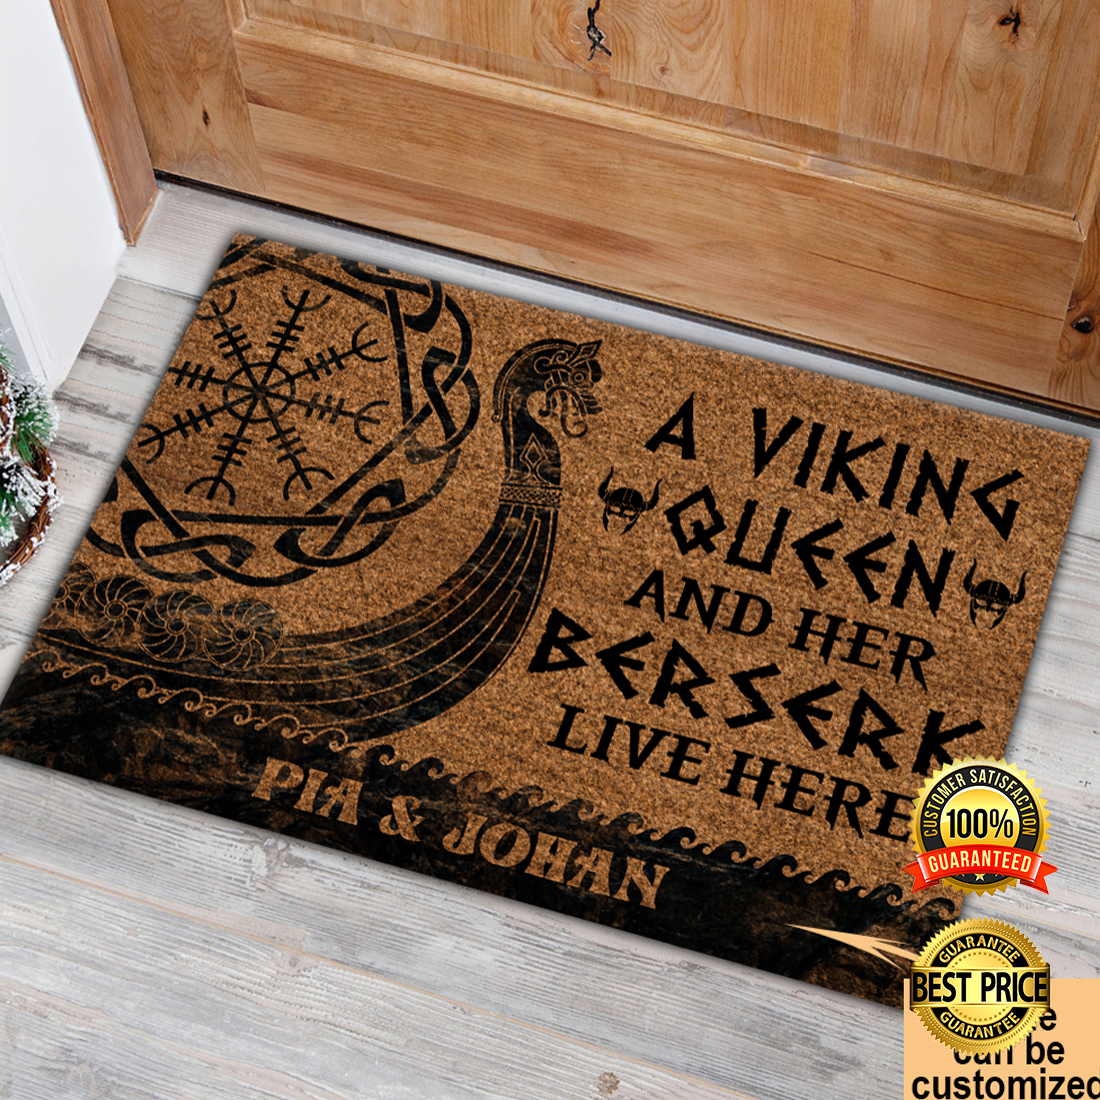 Personalized a viking queen and her berserk live here doormat 4